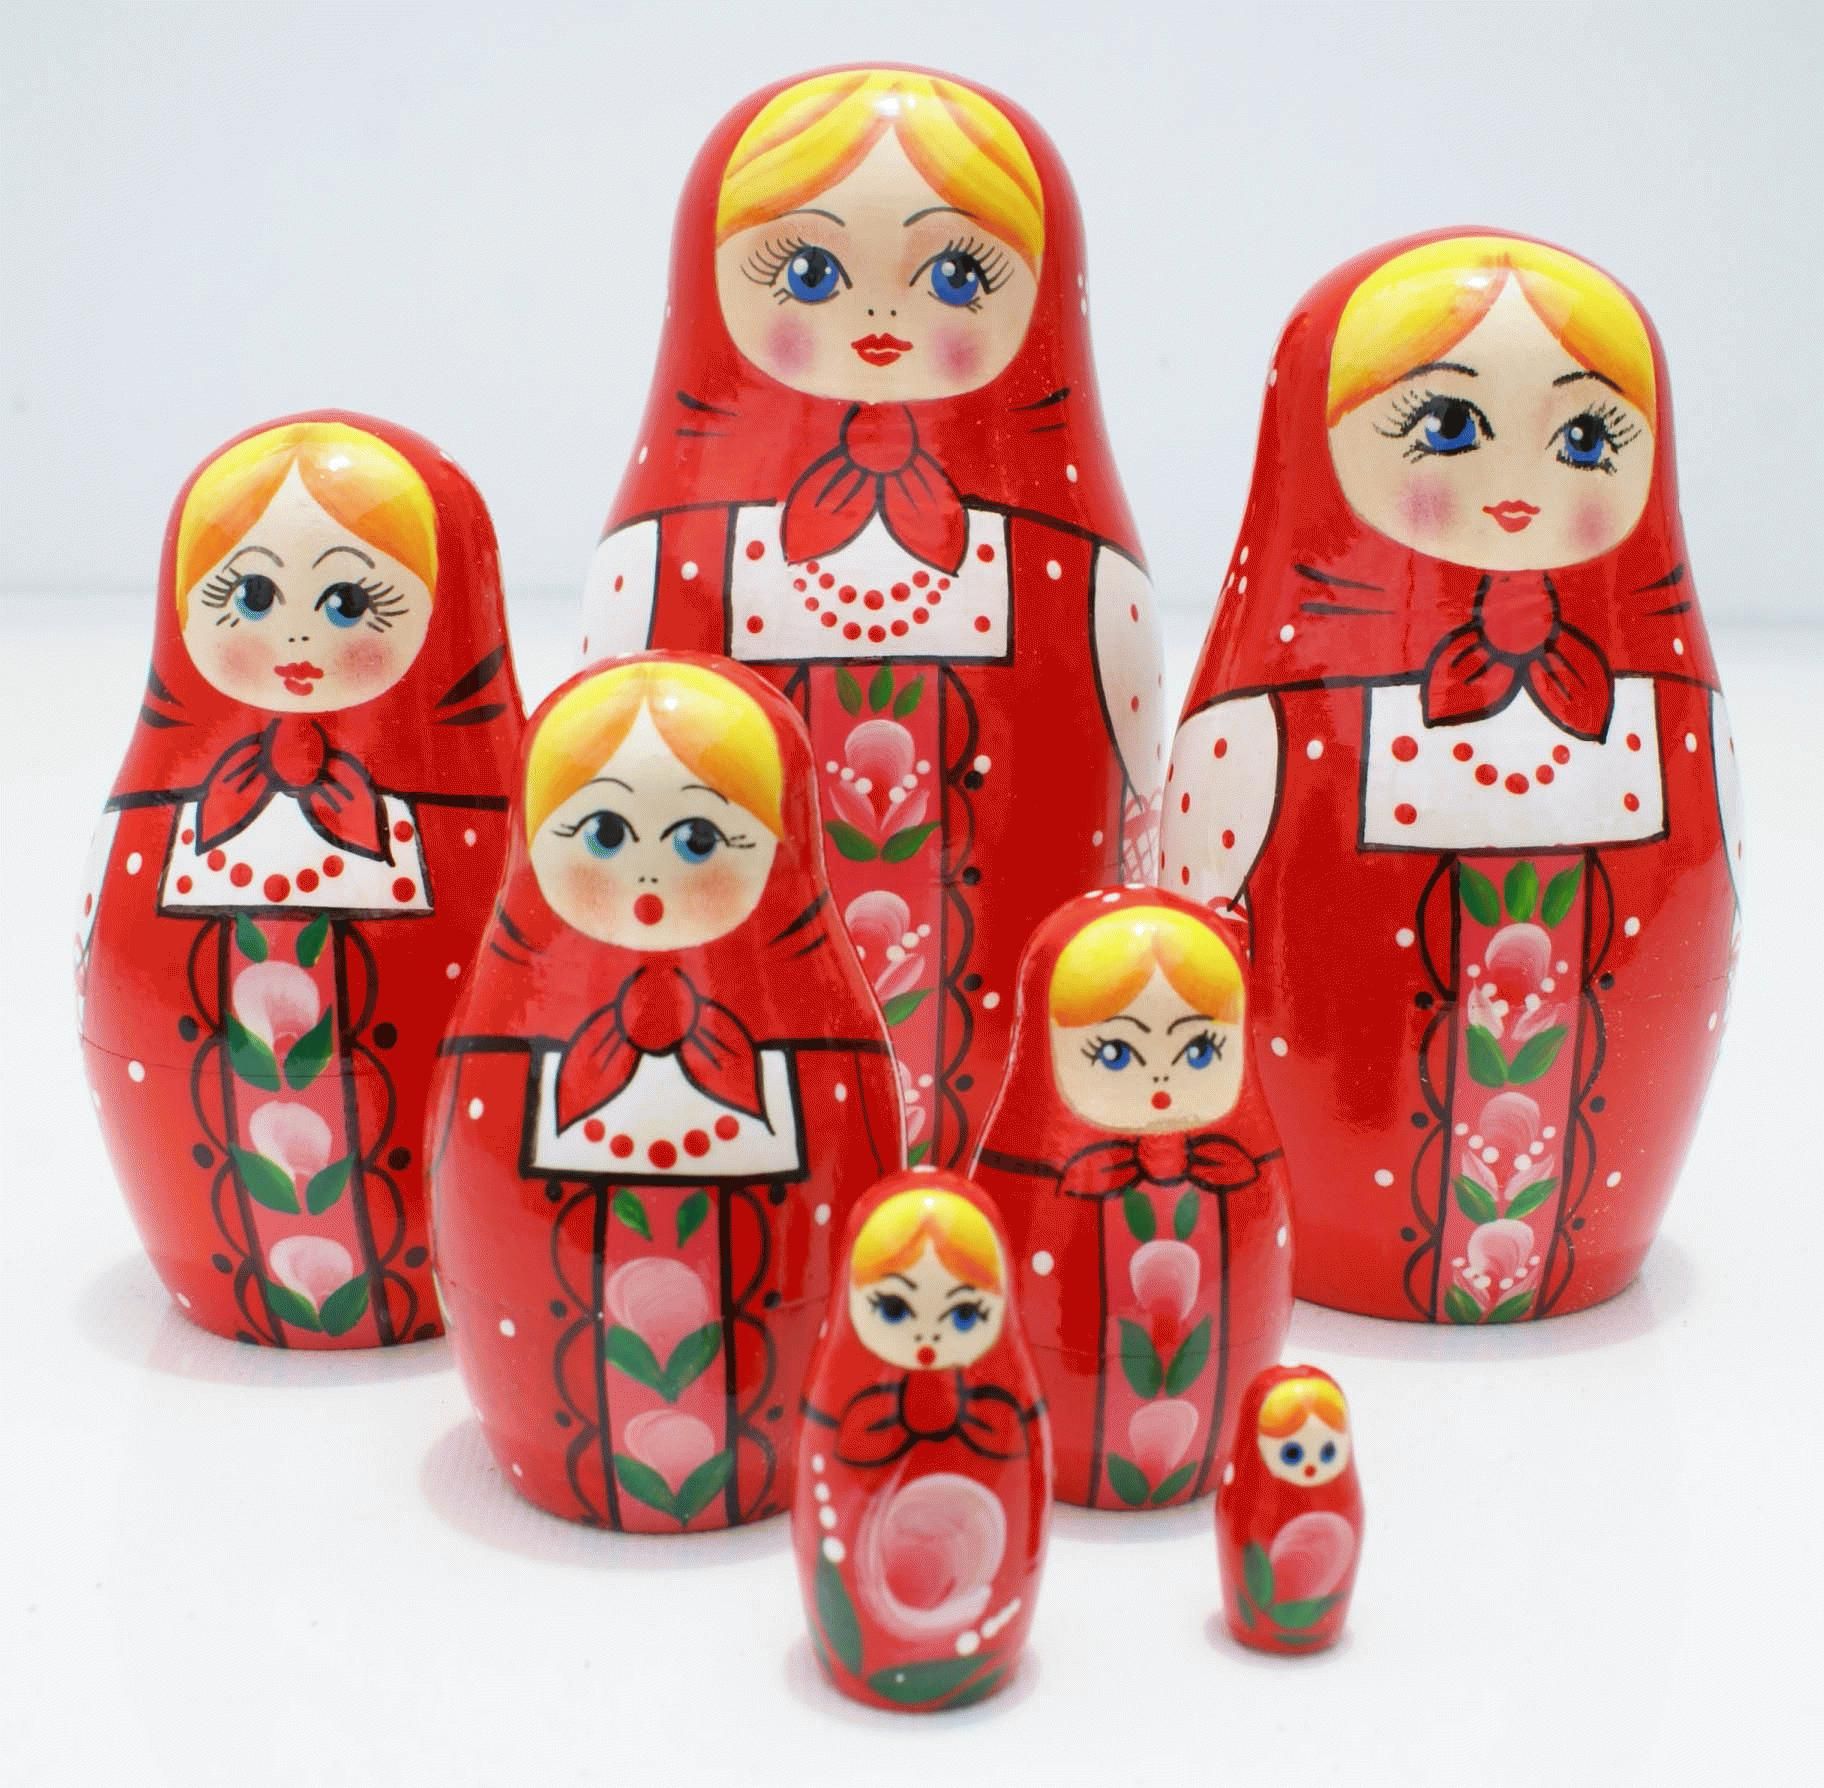 nesting dolls | Category: Matryoshka dolls >> Product: 7011 Red ...